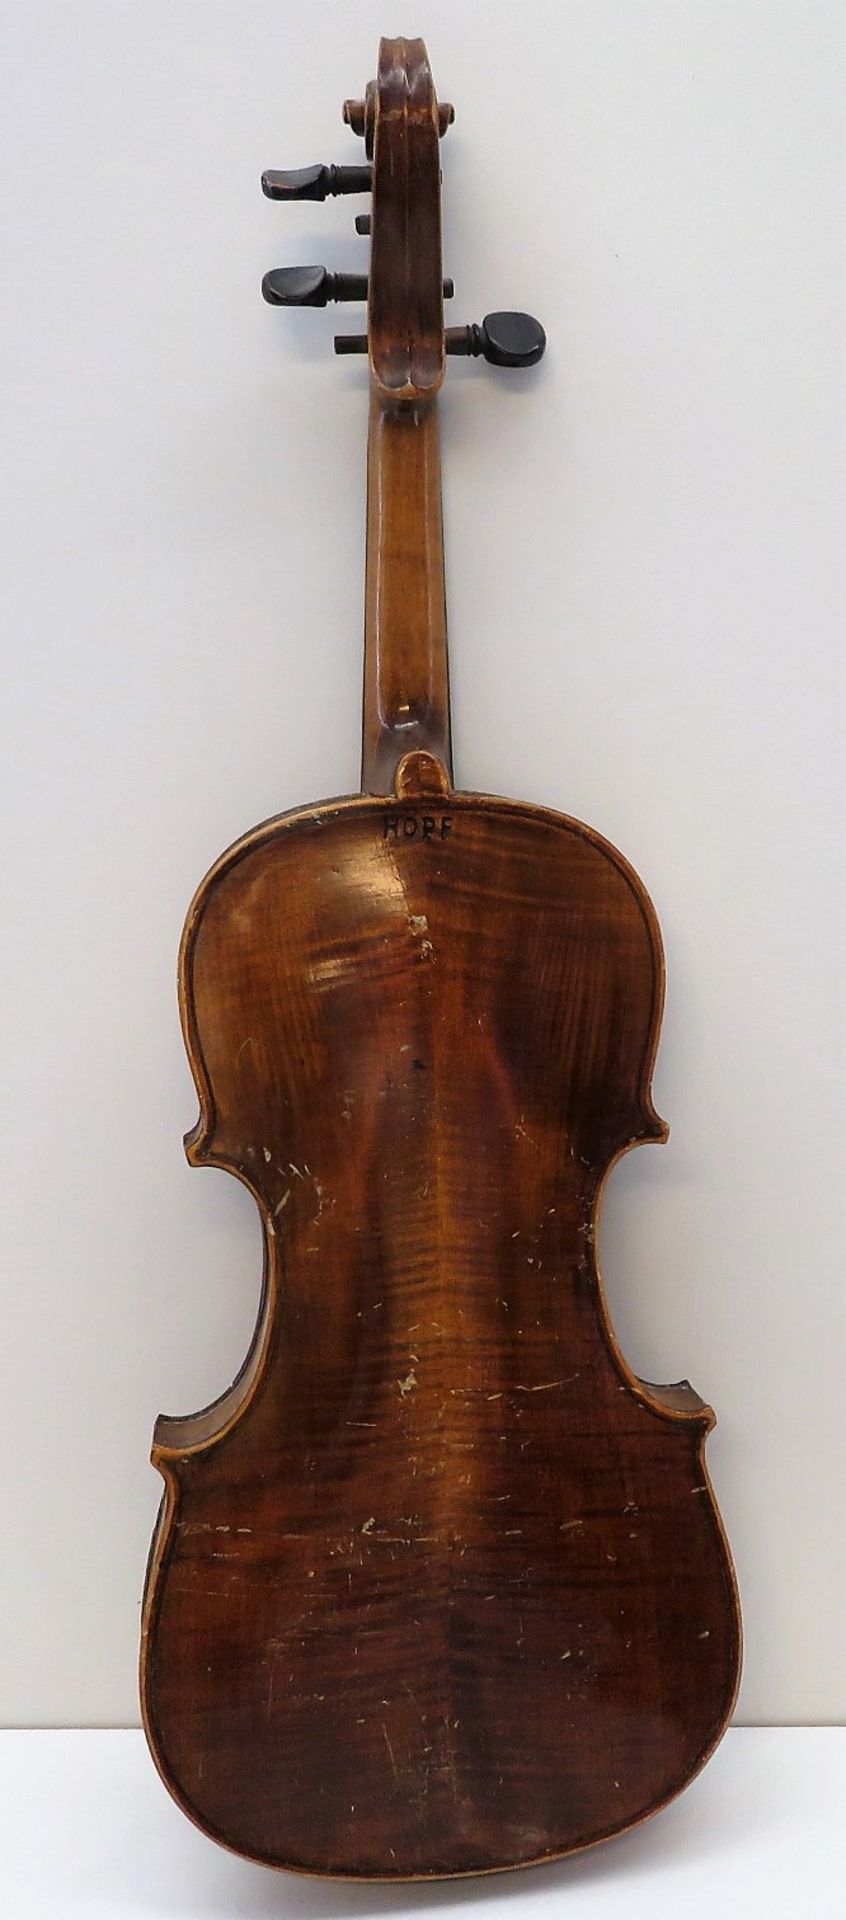 Alte Geige, Etikett "Christian Donat Hopff Klingenthal 1736", Gebrauchsspuren, 59 x 19 x 9 cm. - Image 2 of 3